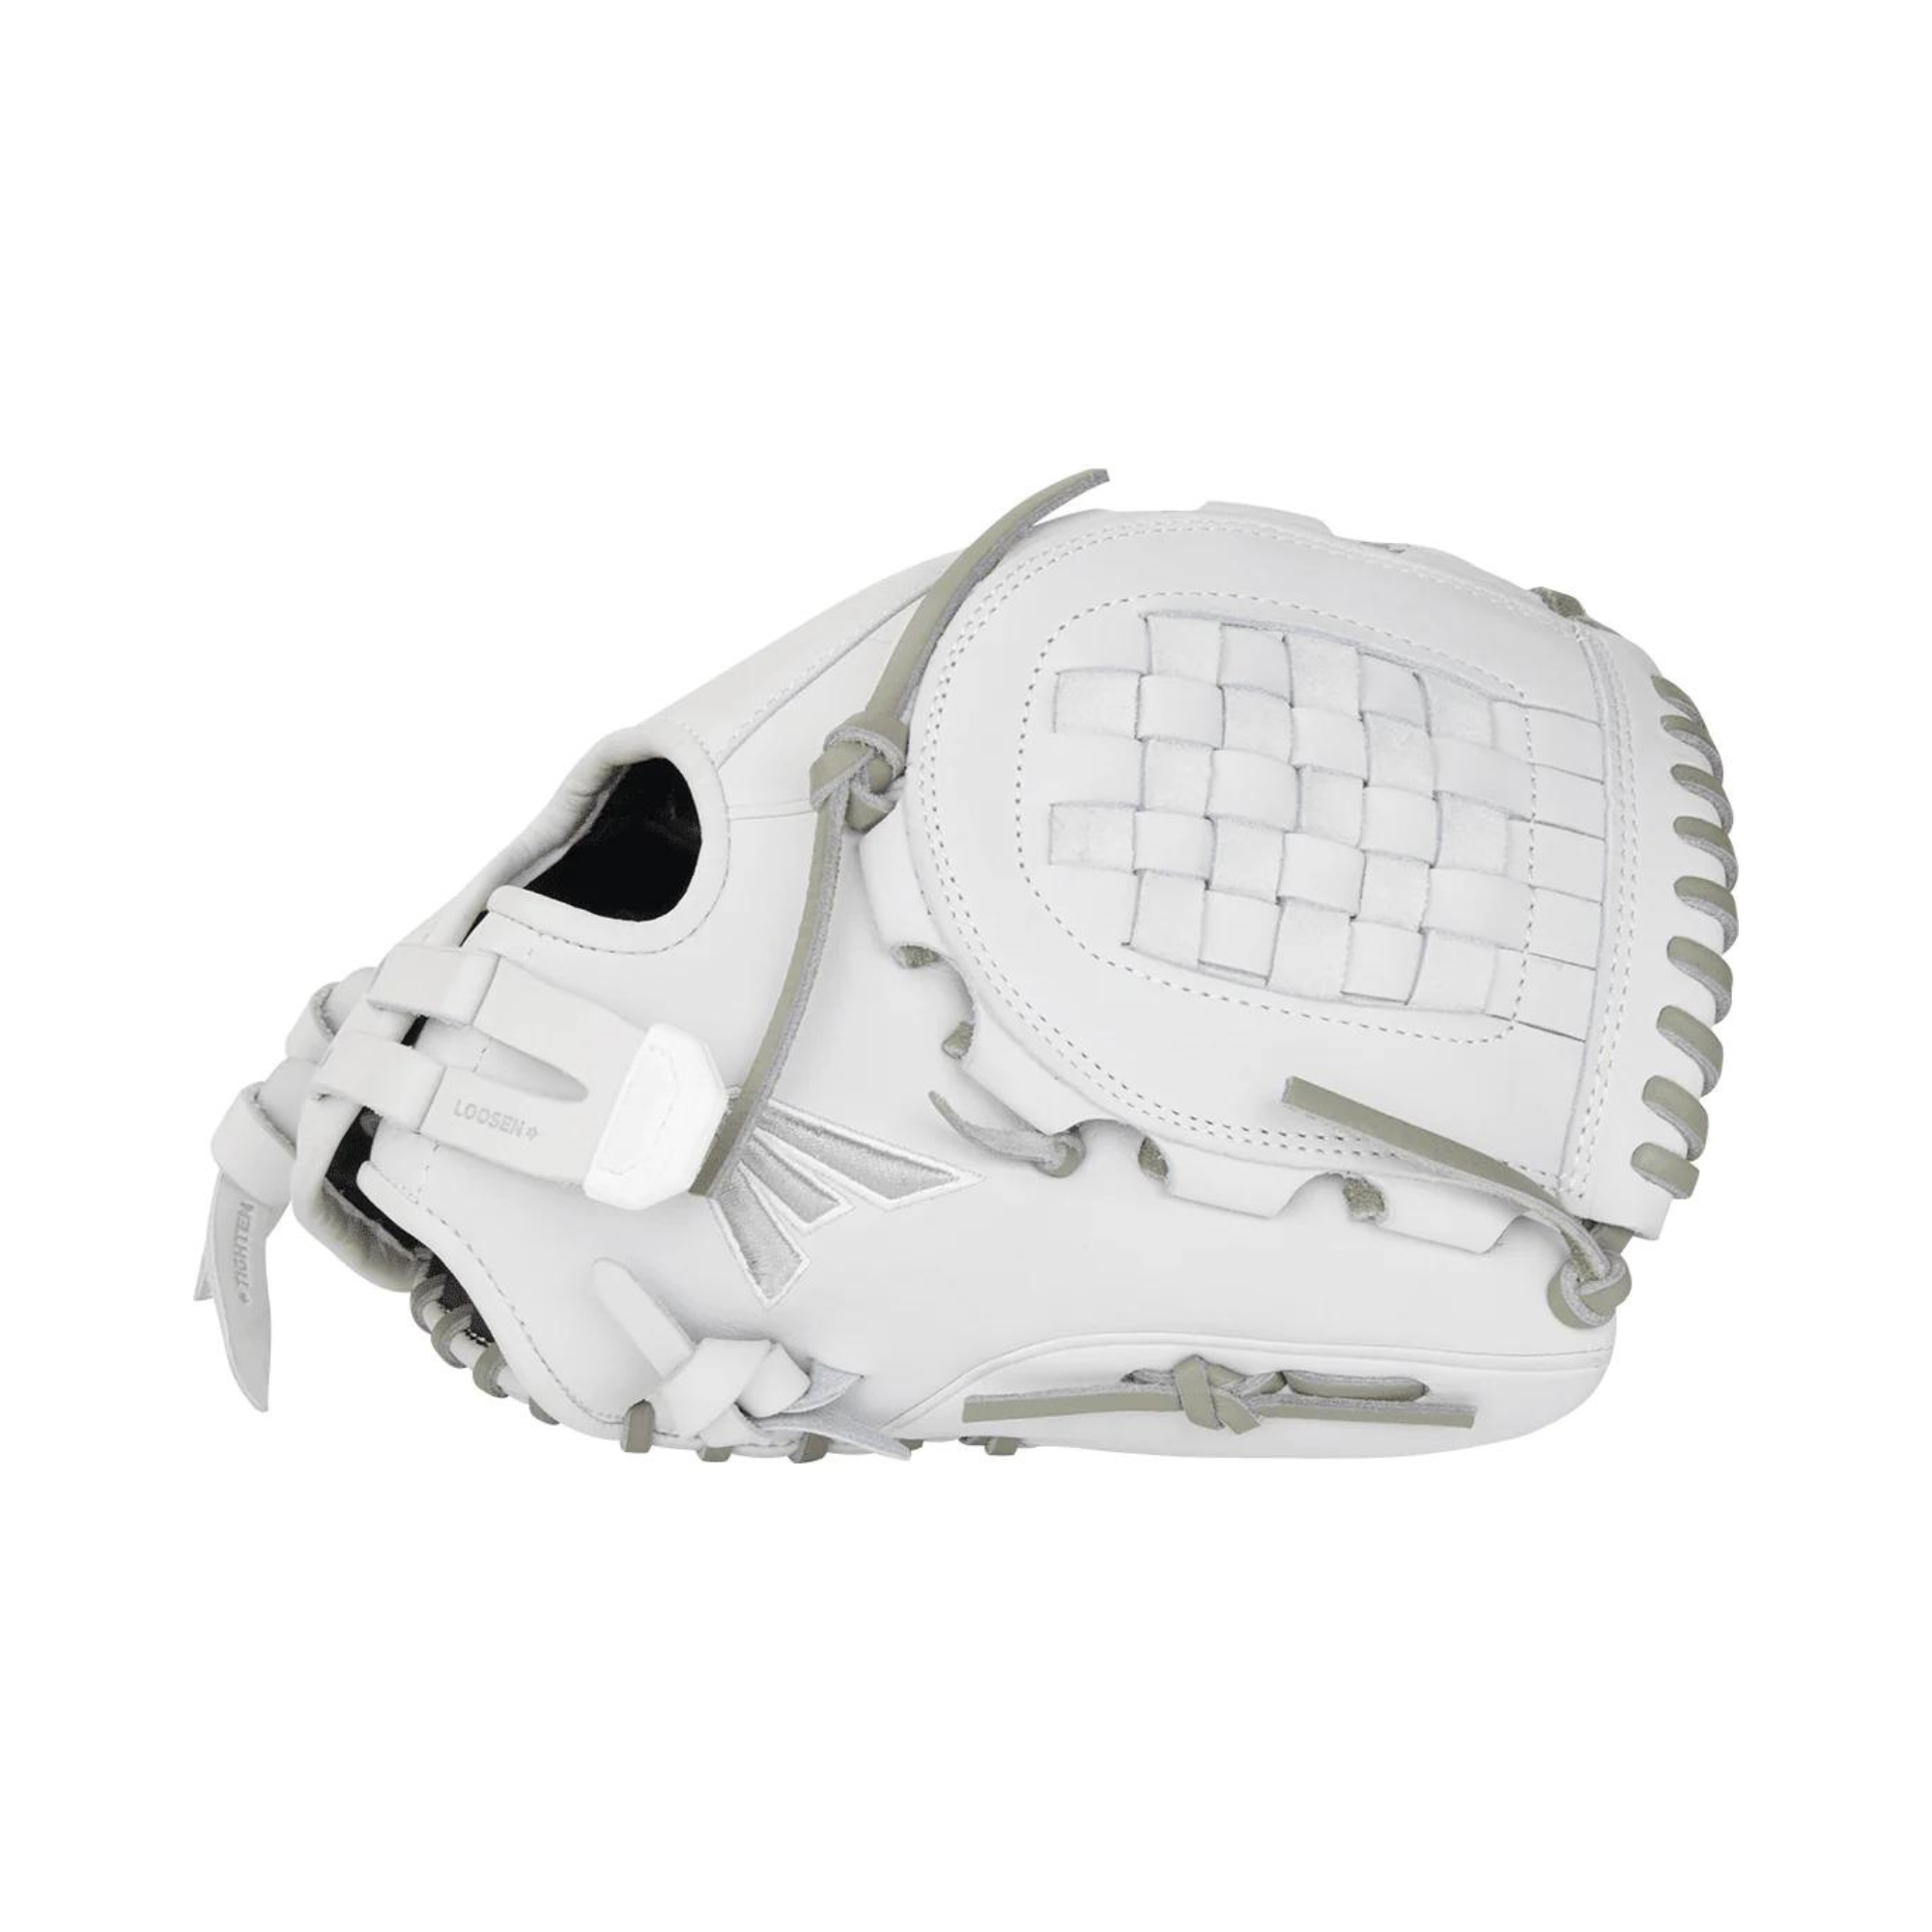 Easton Pro Collection Series Softball Glove 12" LHT